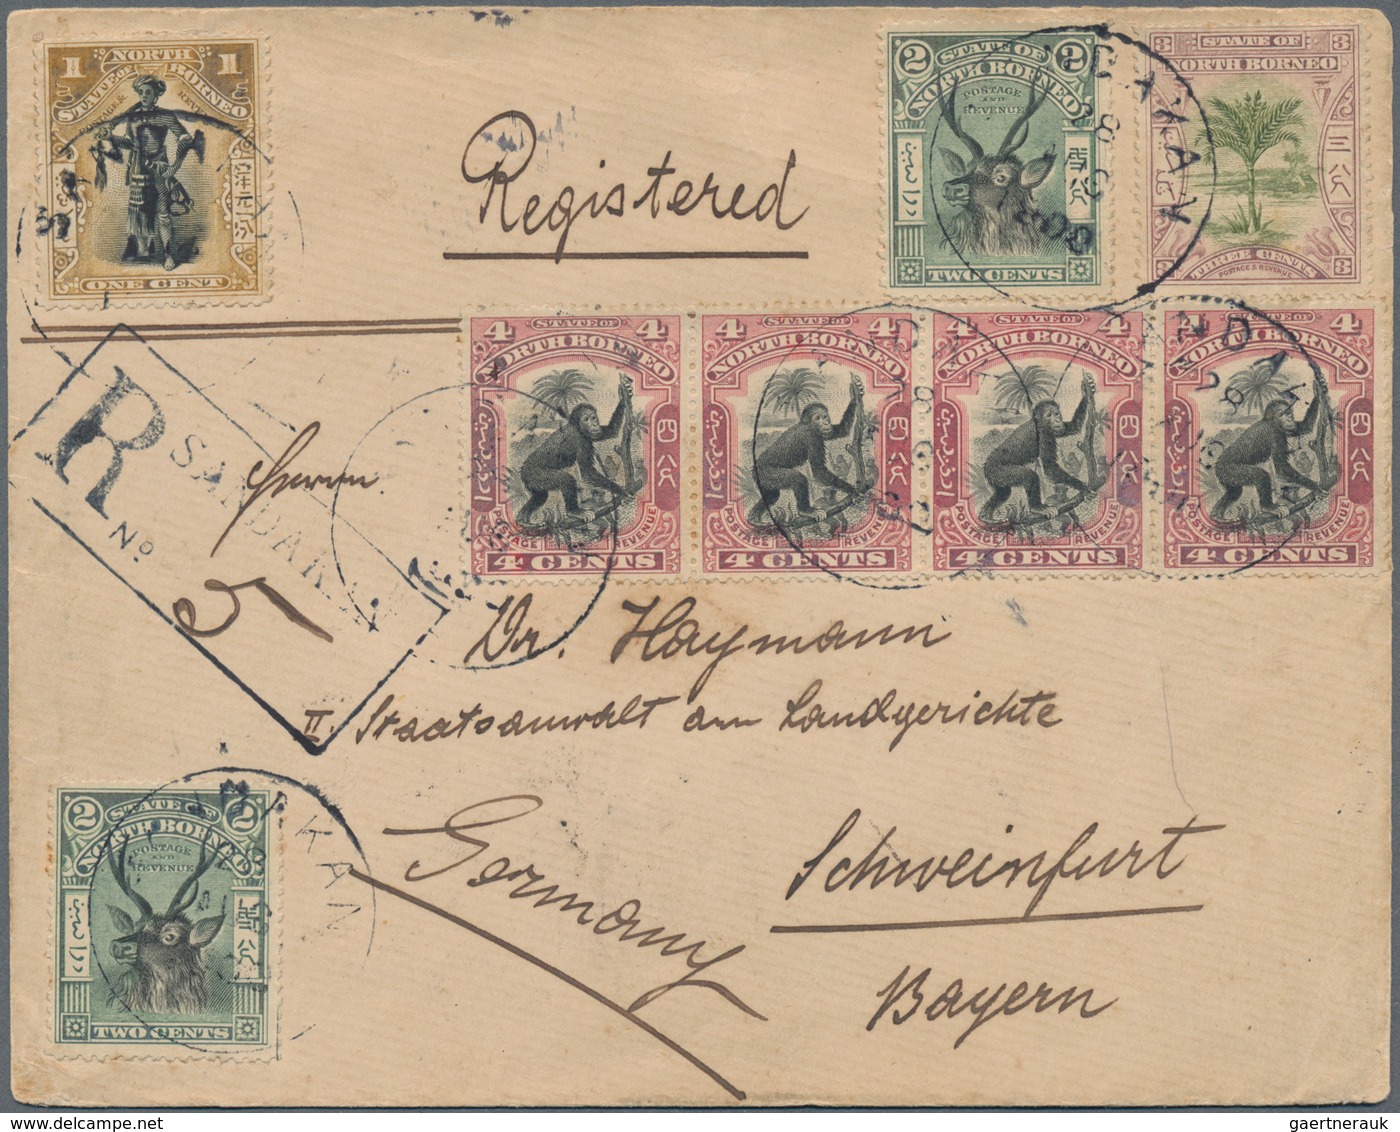 Nordborneo: 1900 Registered Cover From Sandakan To Schweinfurt, Germany Via Italian And German Railw - North Borneo (...-1963)